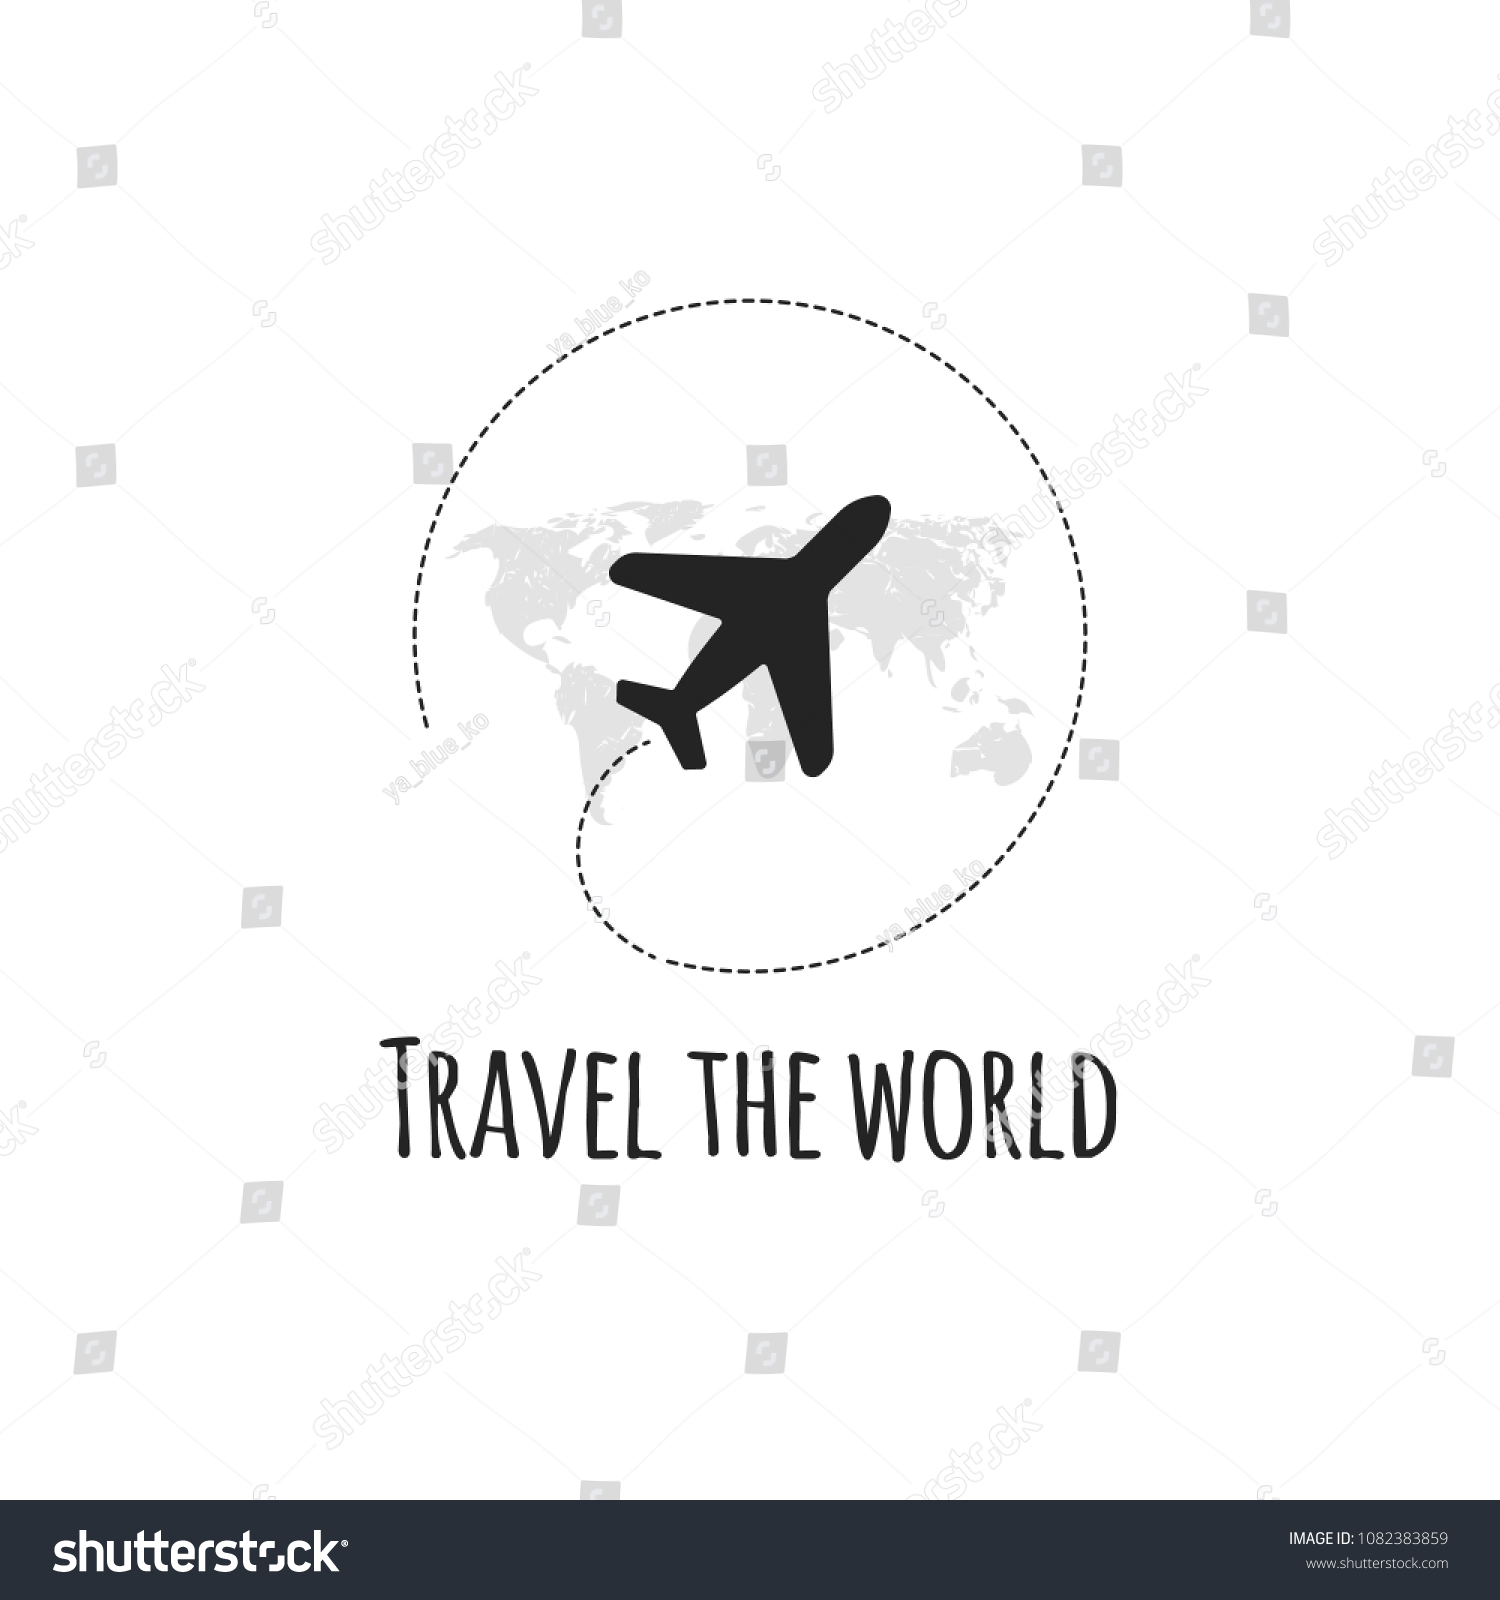 Travel logo. Vector illustration. Black airplane. Isolated on white